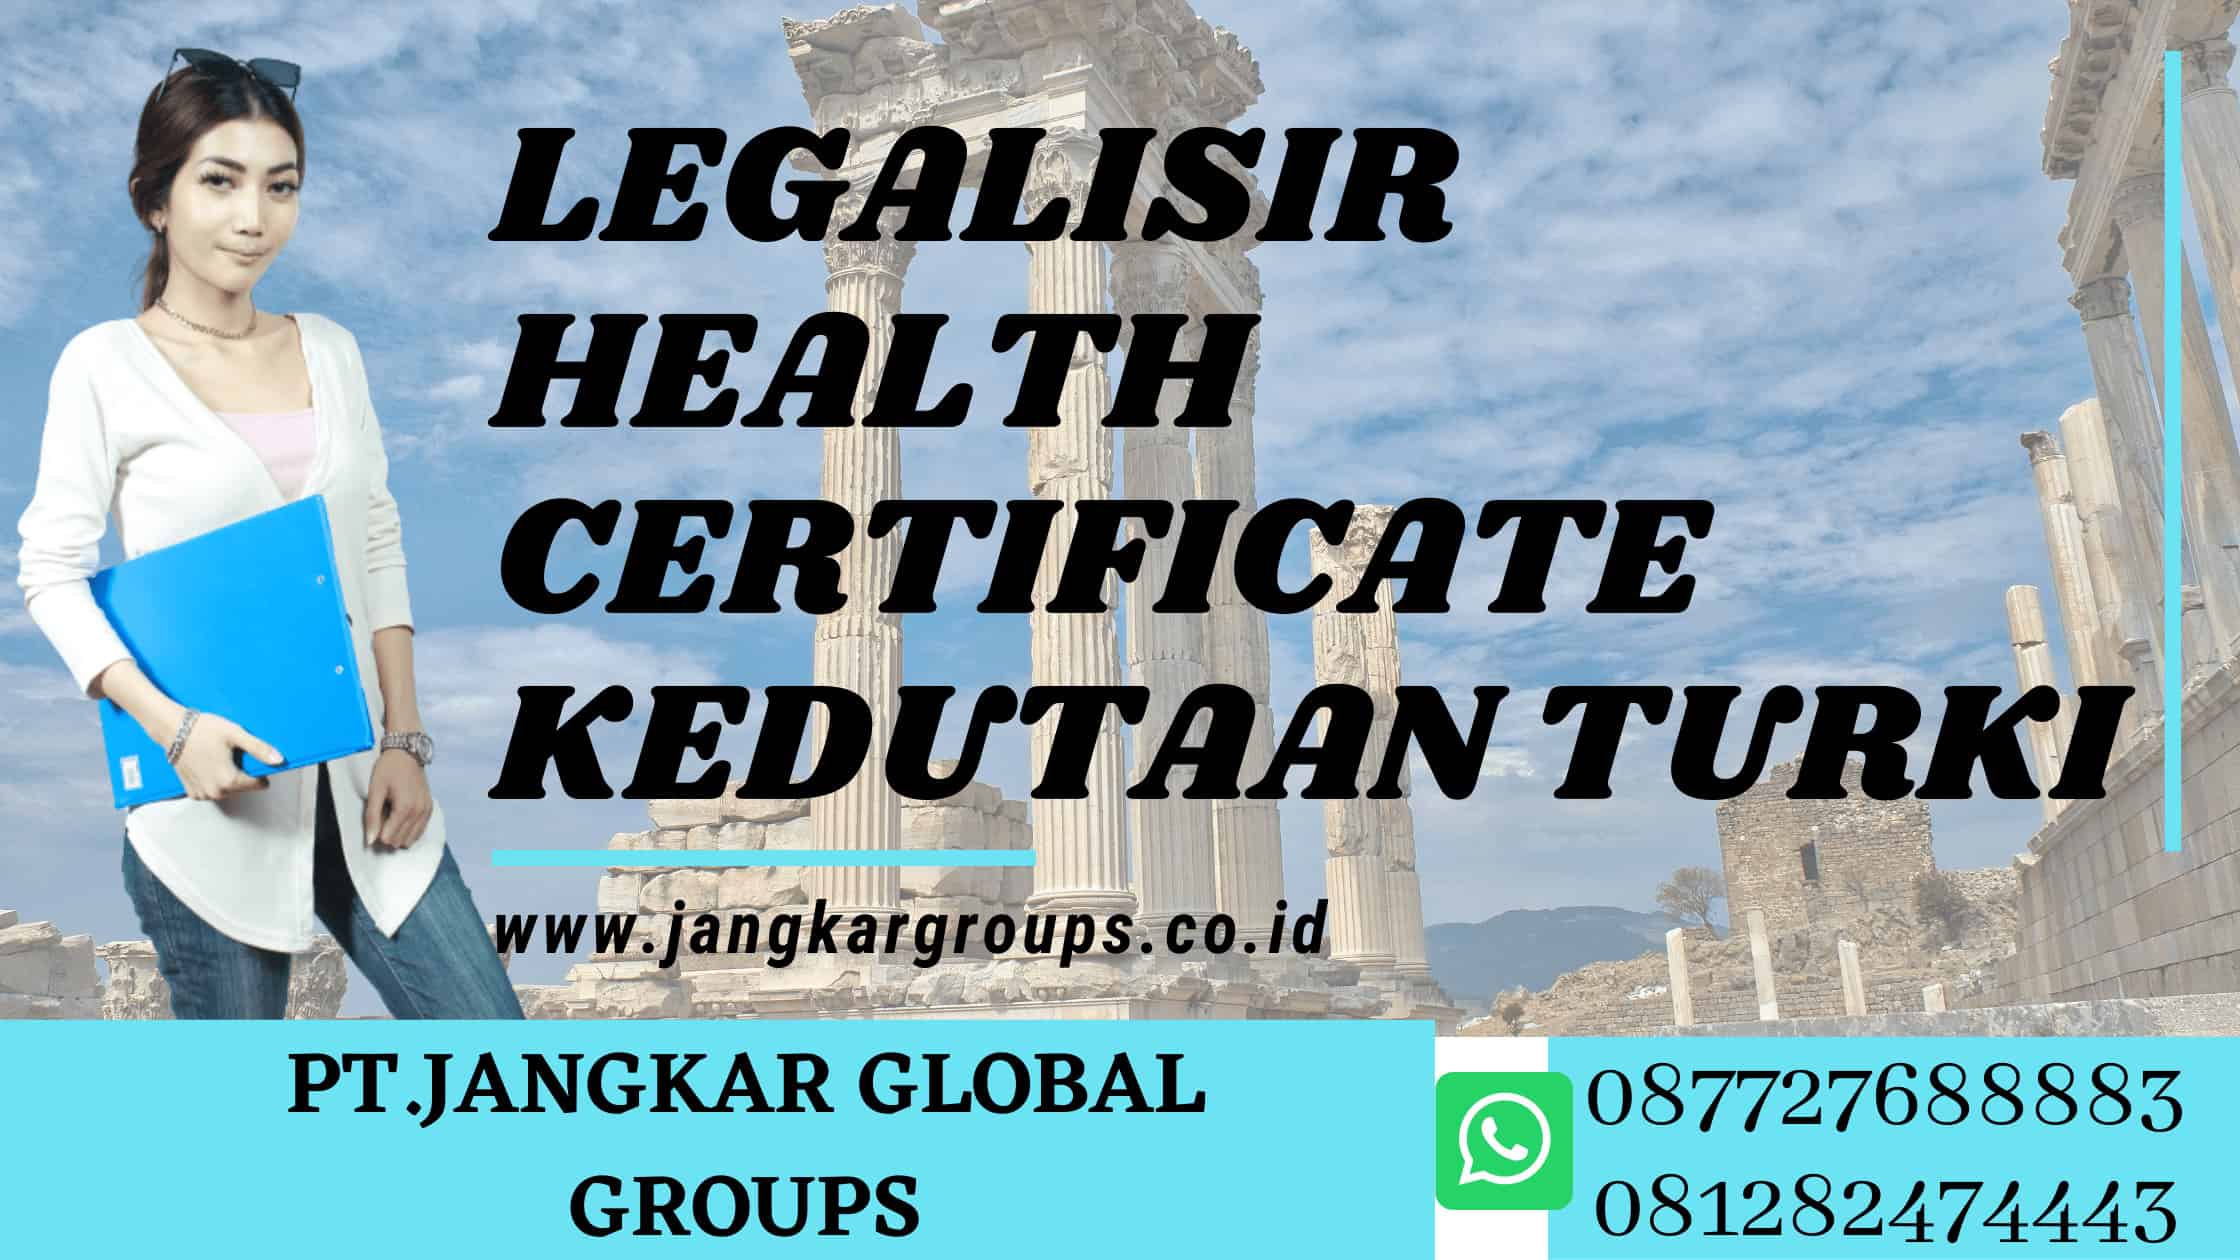 LEGALISIR HEALTH CERTIFICATE KEDUTAAN TURKI